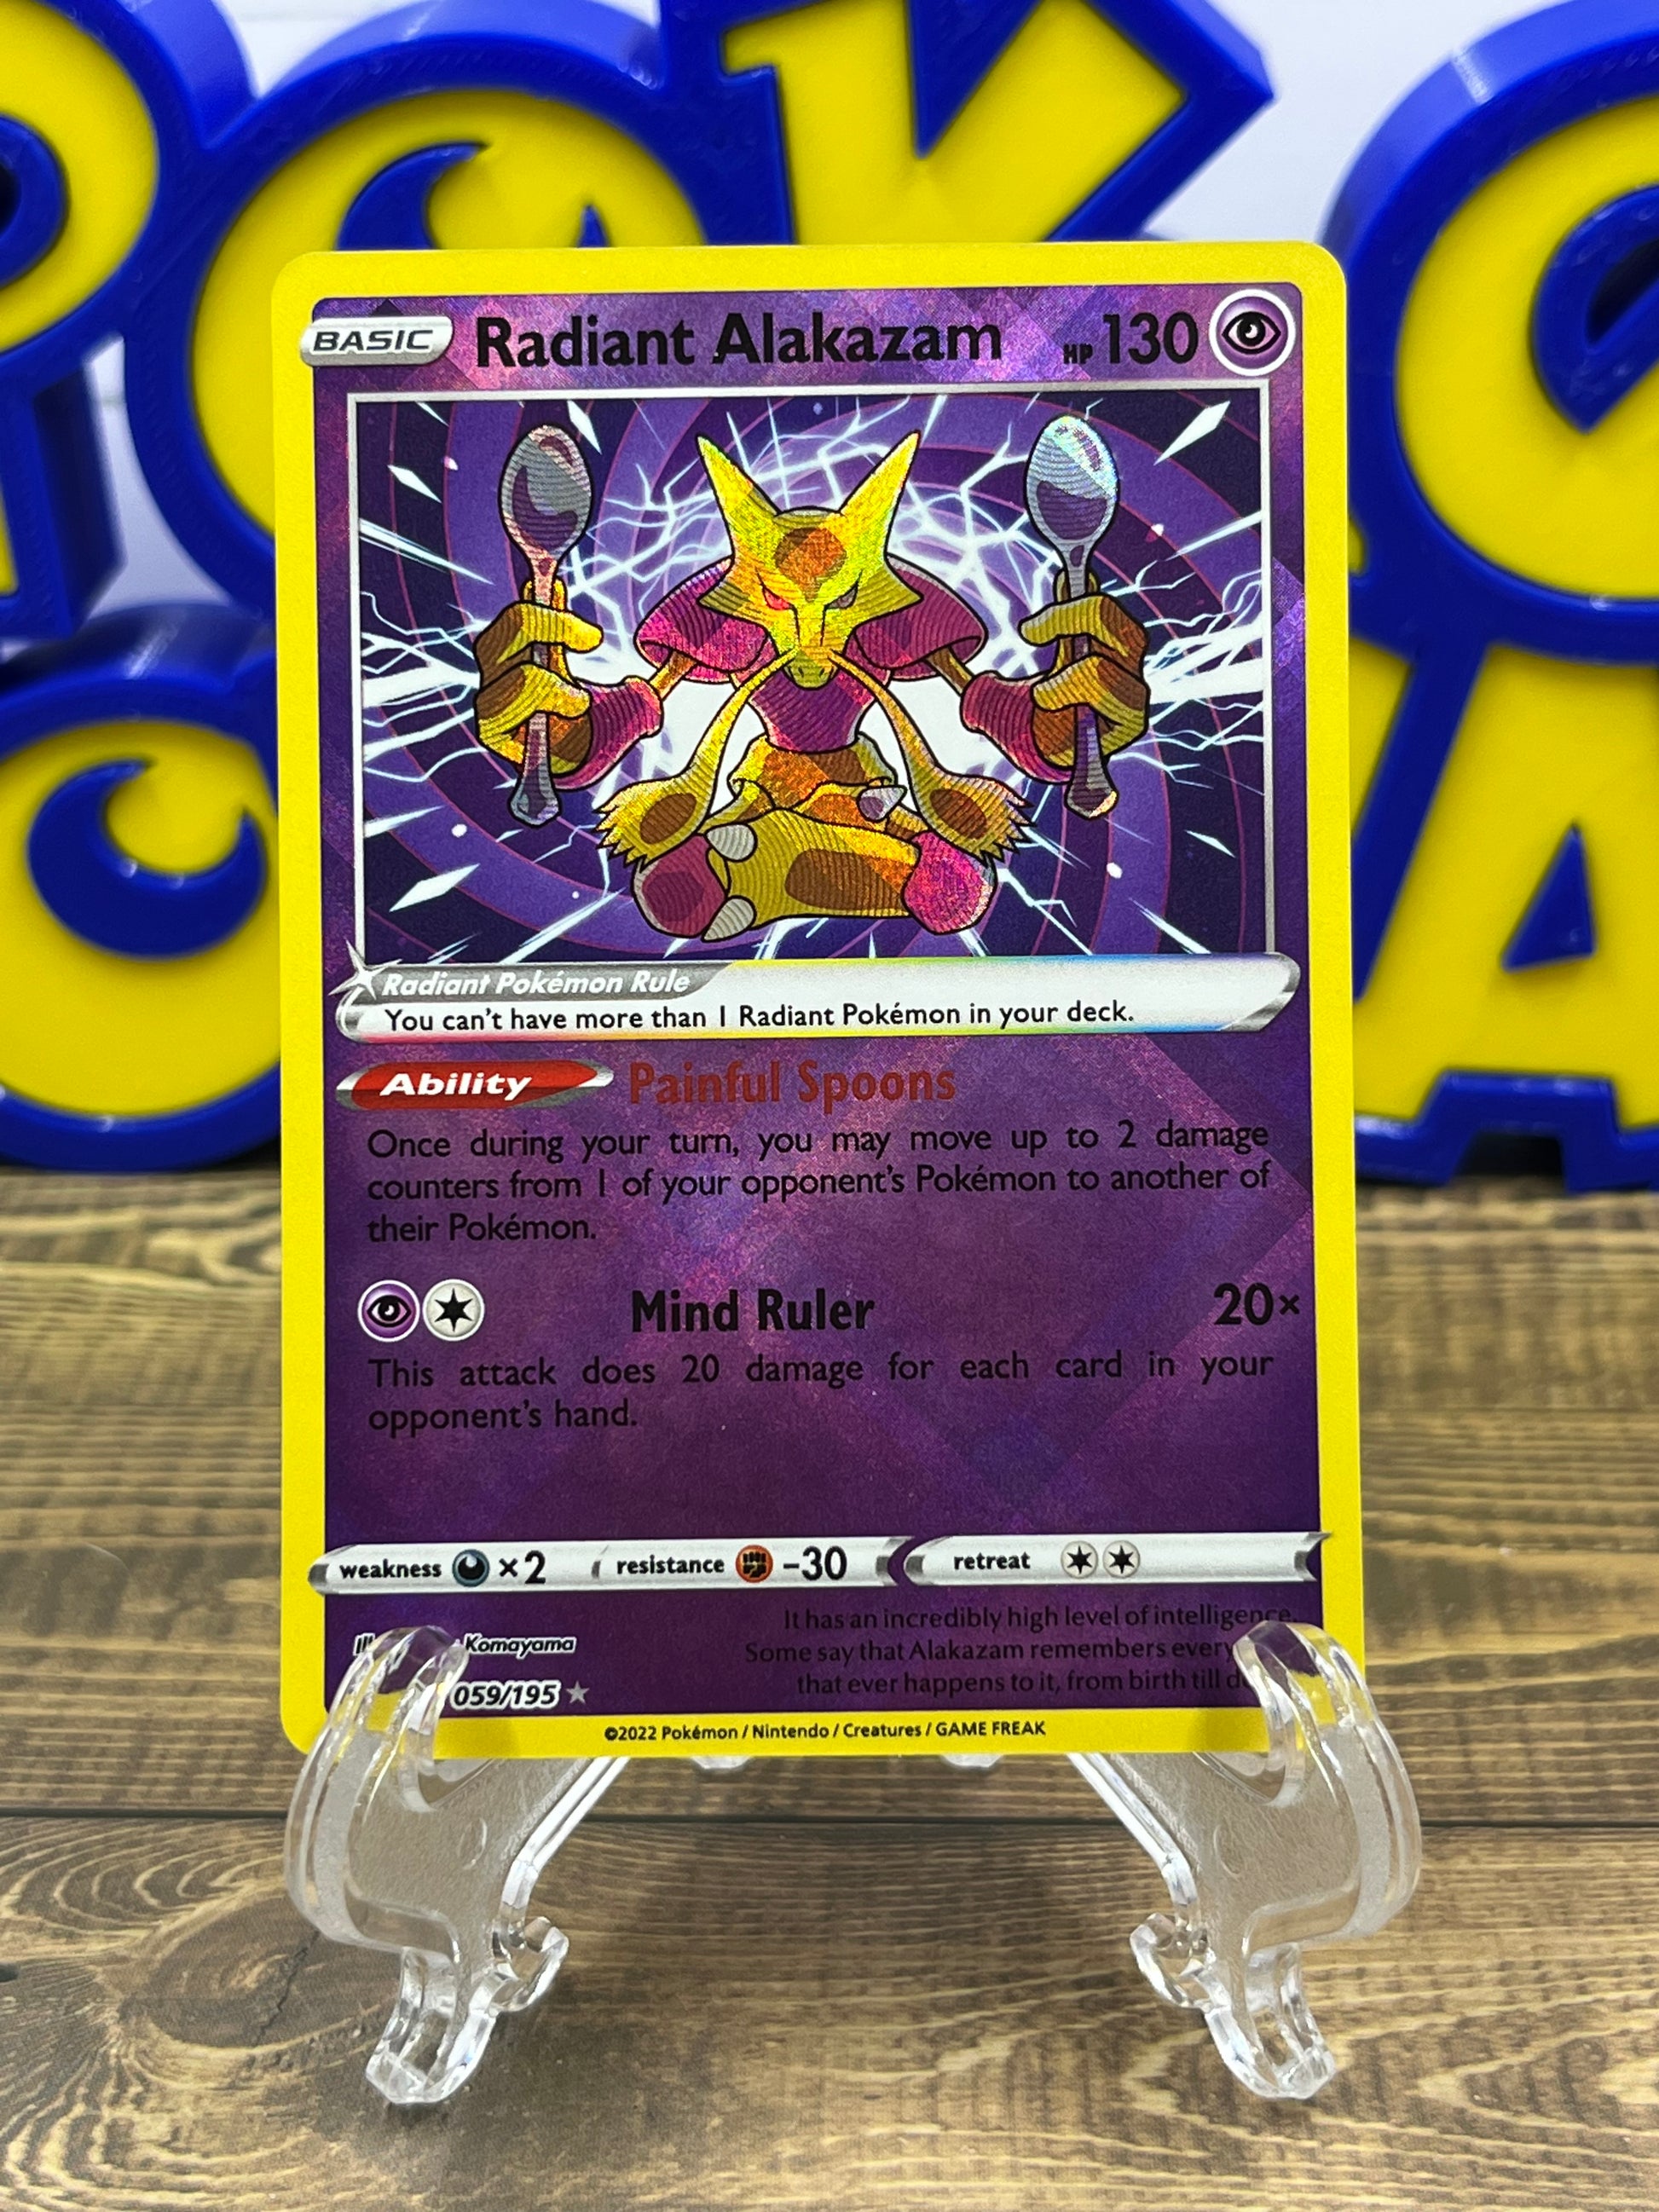 Radiant Alakazam might be my favorite radiant so far : r/PokemonTCG